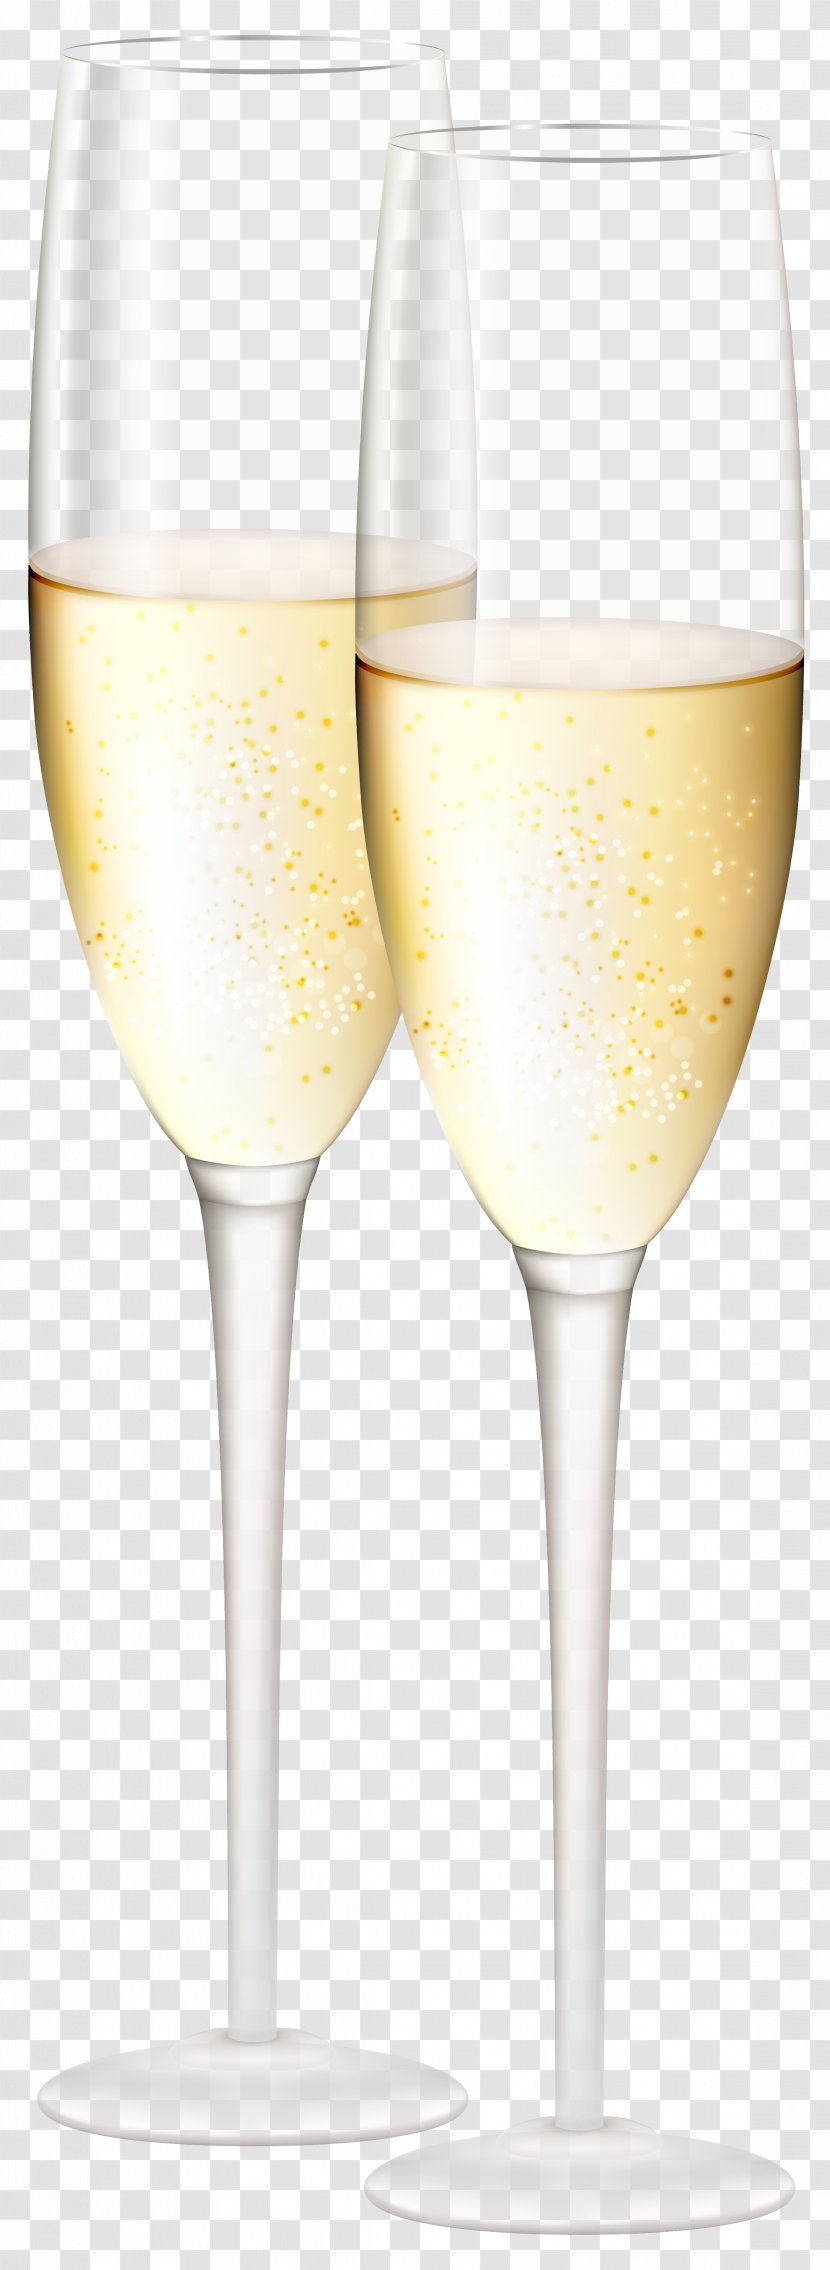 White Wine Champagne Glass Cocktail - Drink - Glasses Transparent Clip Art Image Transparent PNG